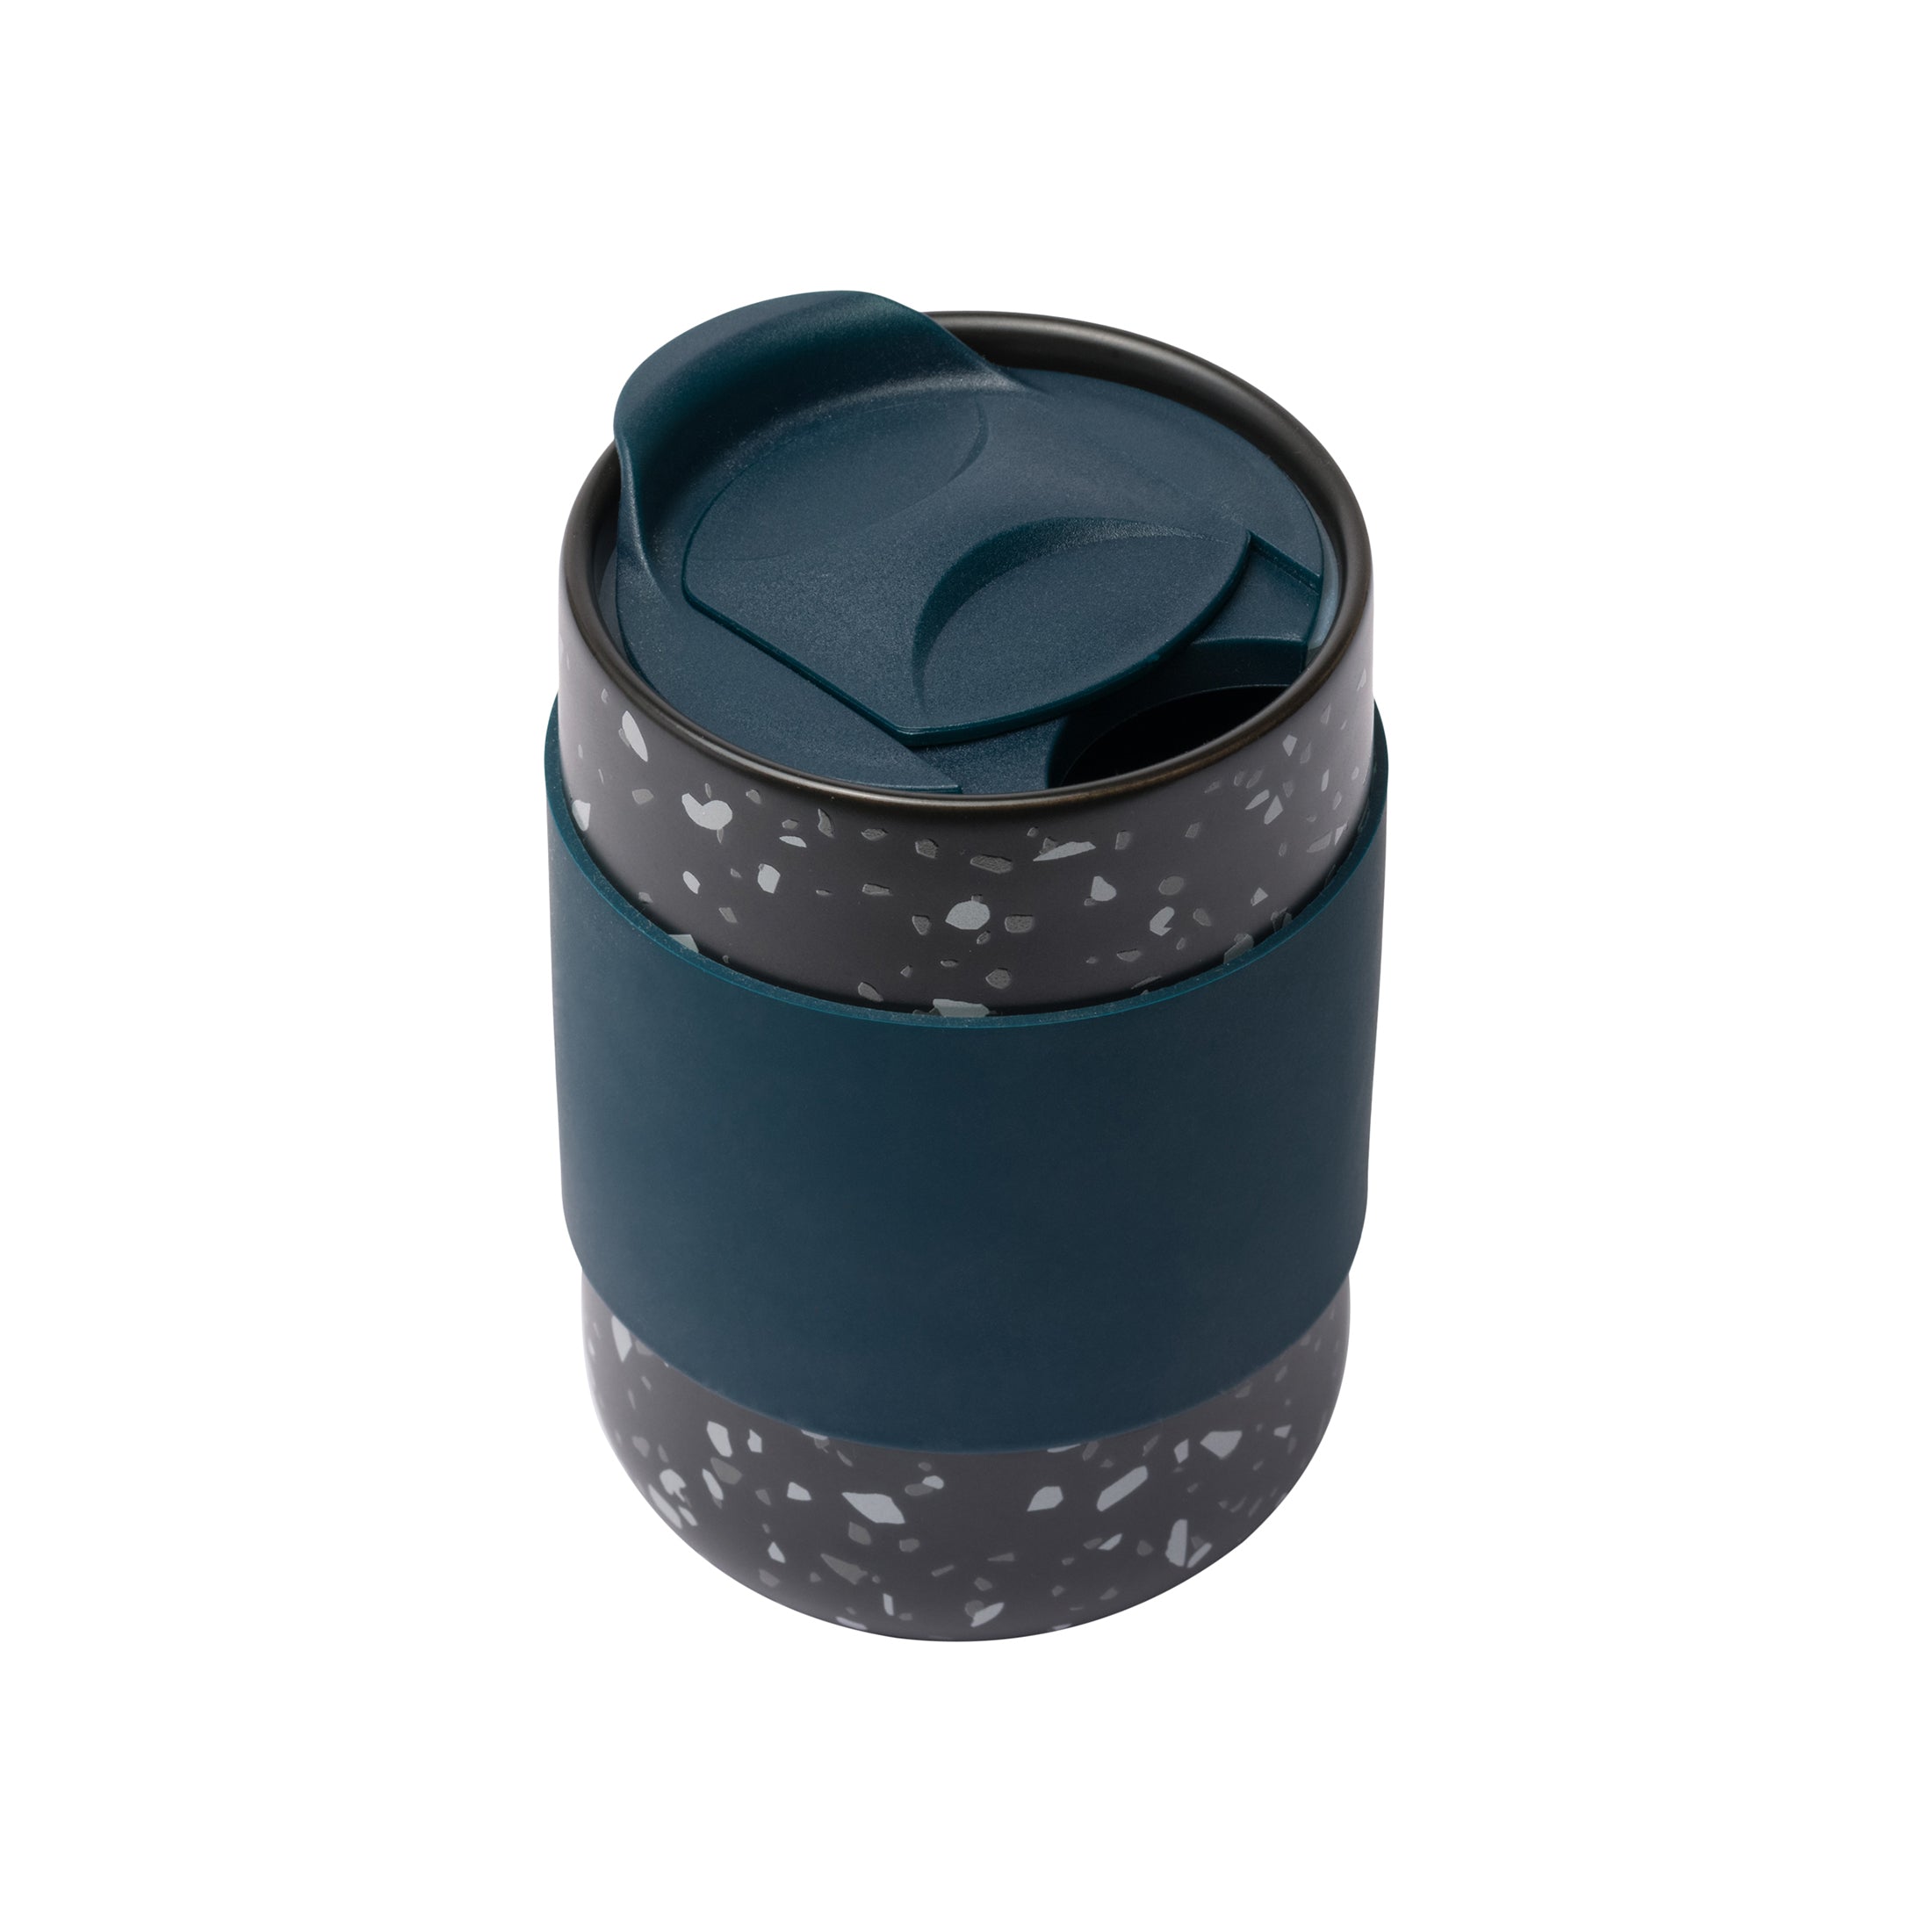 Herring & Bones - Concept Store Joyeux - Gentlemen's Hardware - Mugs - Travel Mug en céramique terrazzo